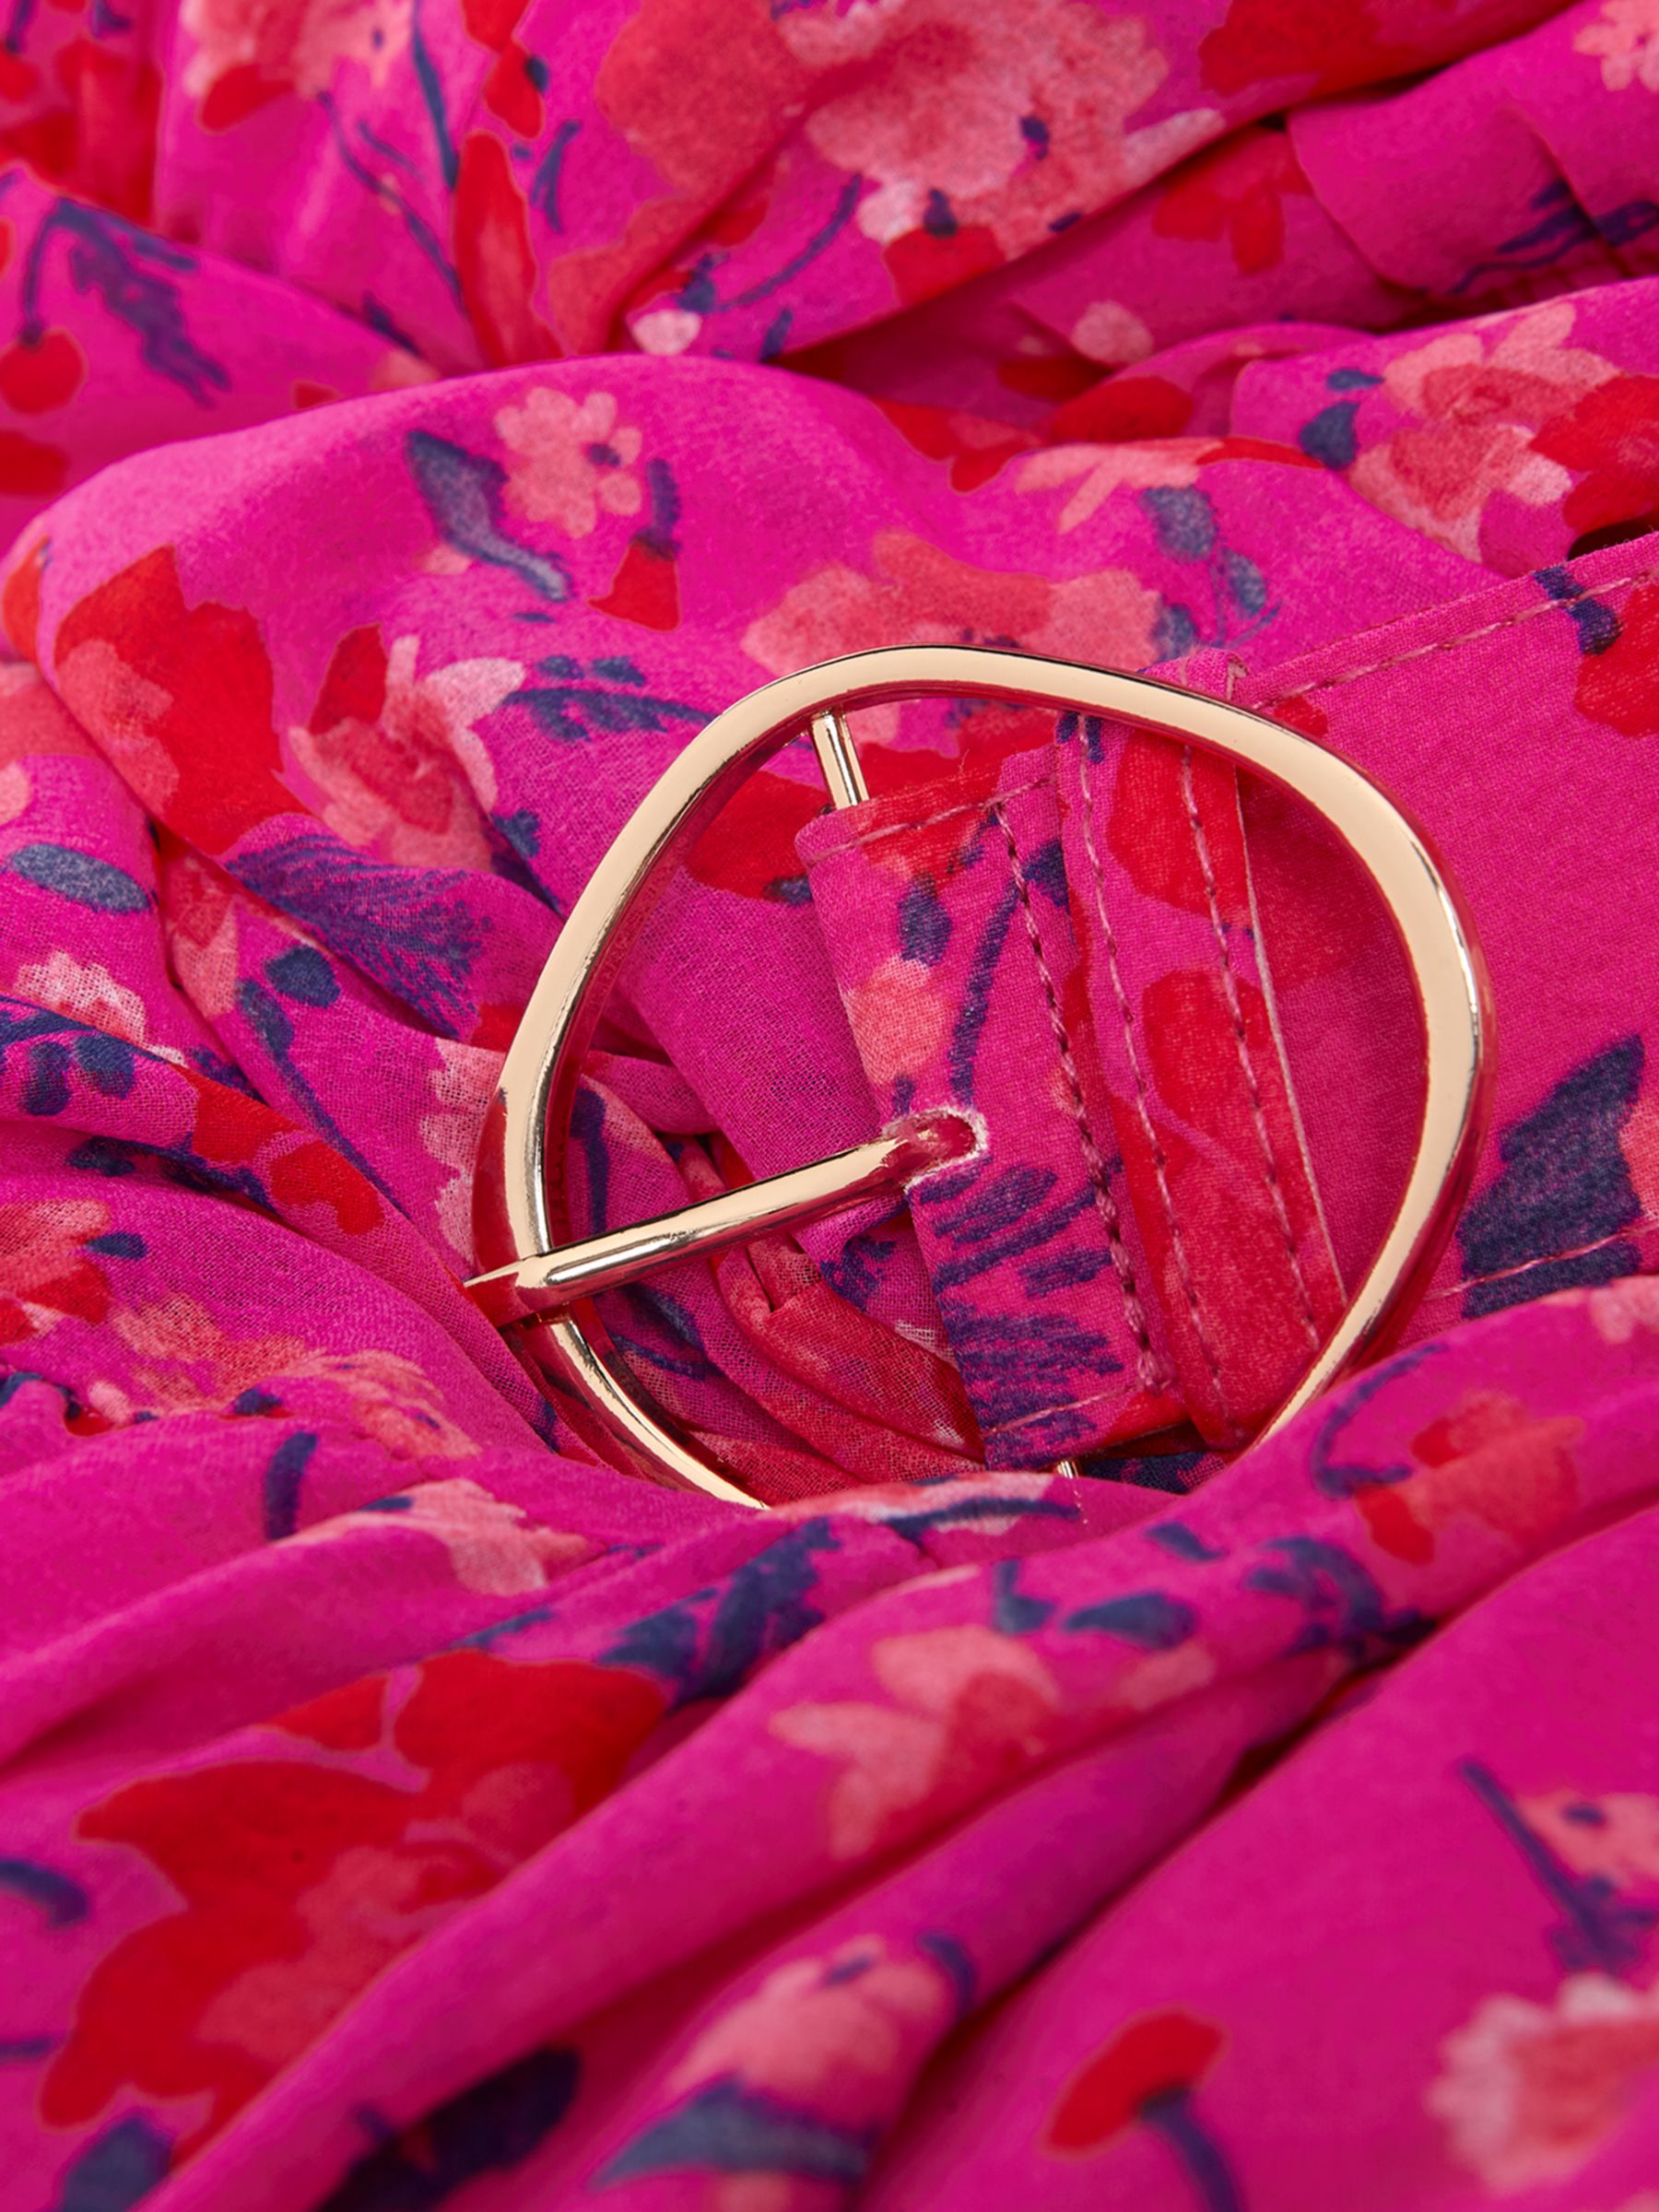 Phase Eight Kara Floral Maxi Dress, Neon Pink, 20